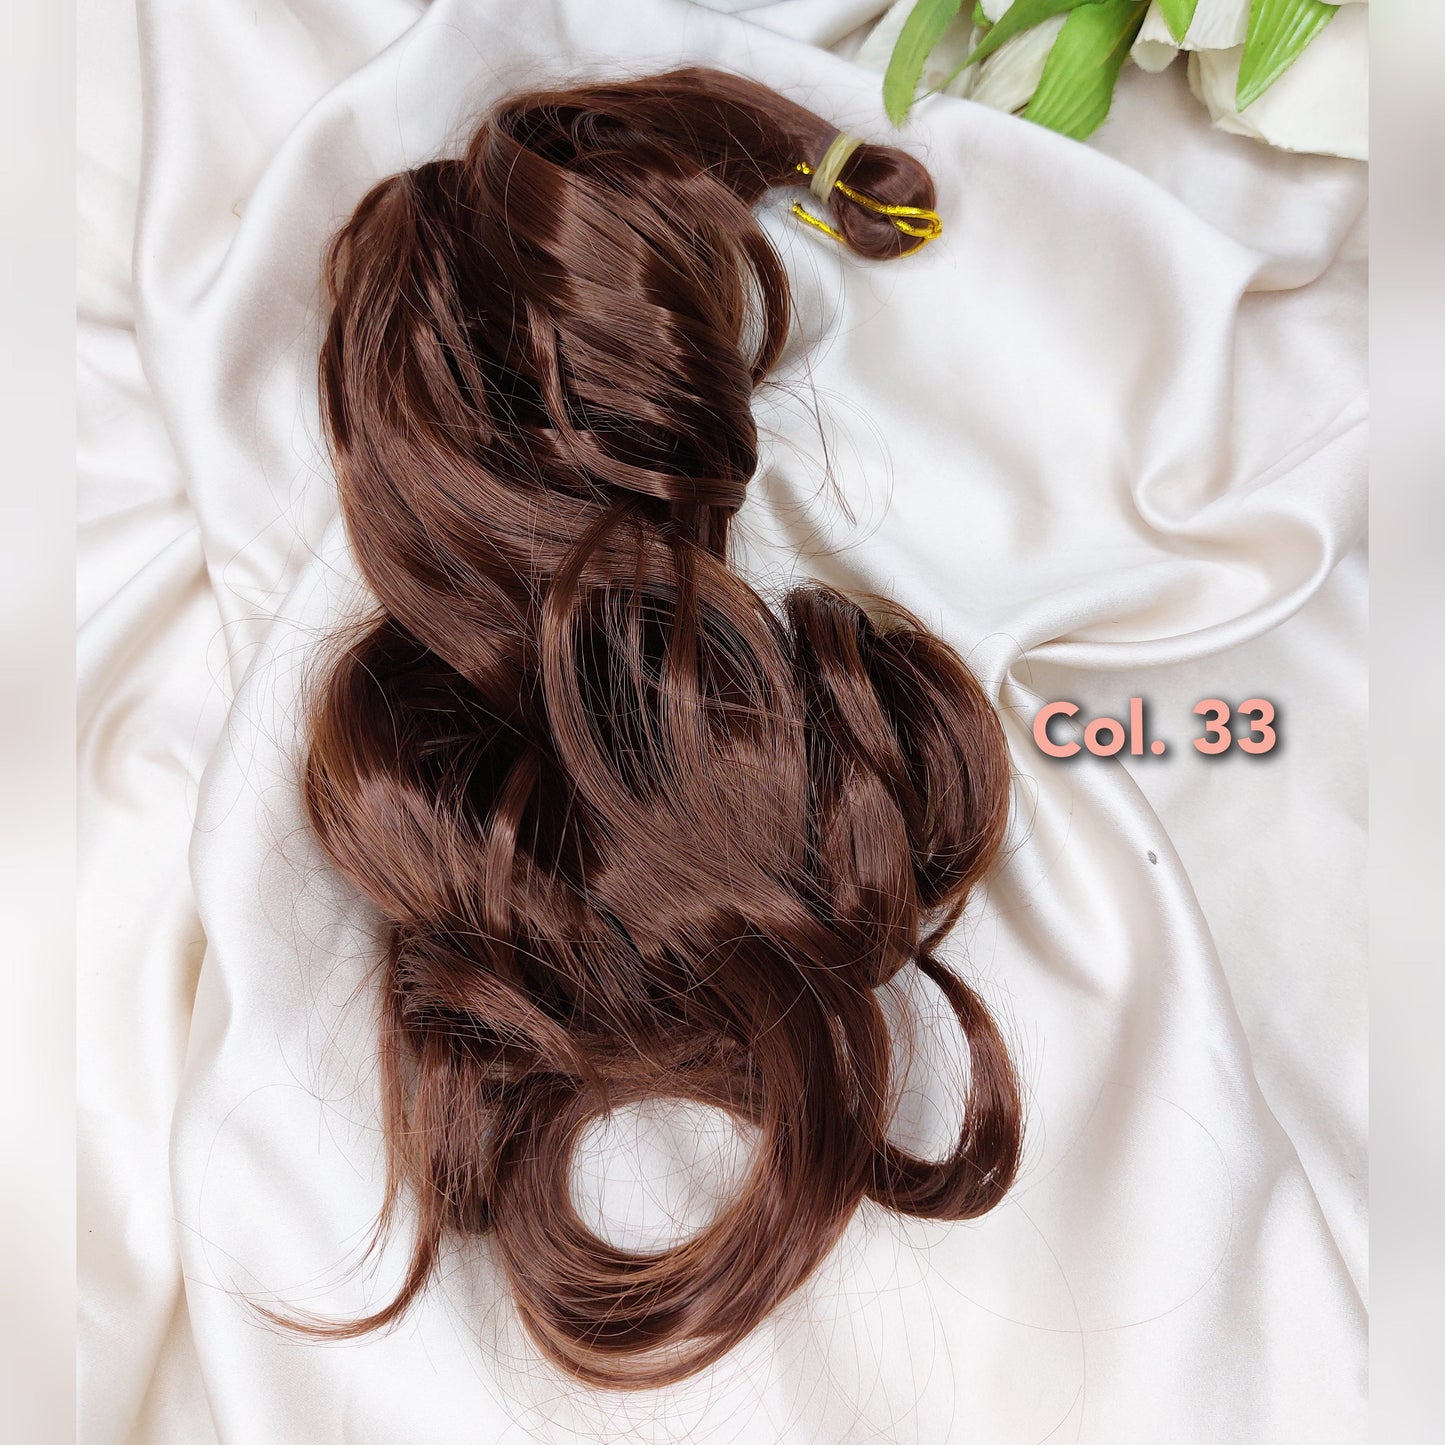 Unbraided SILKY CURLY || Braiding hair (French curl)